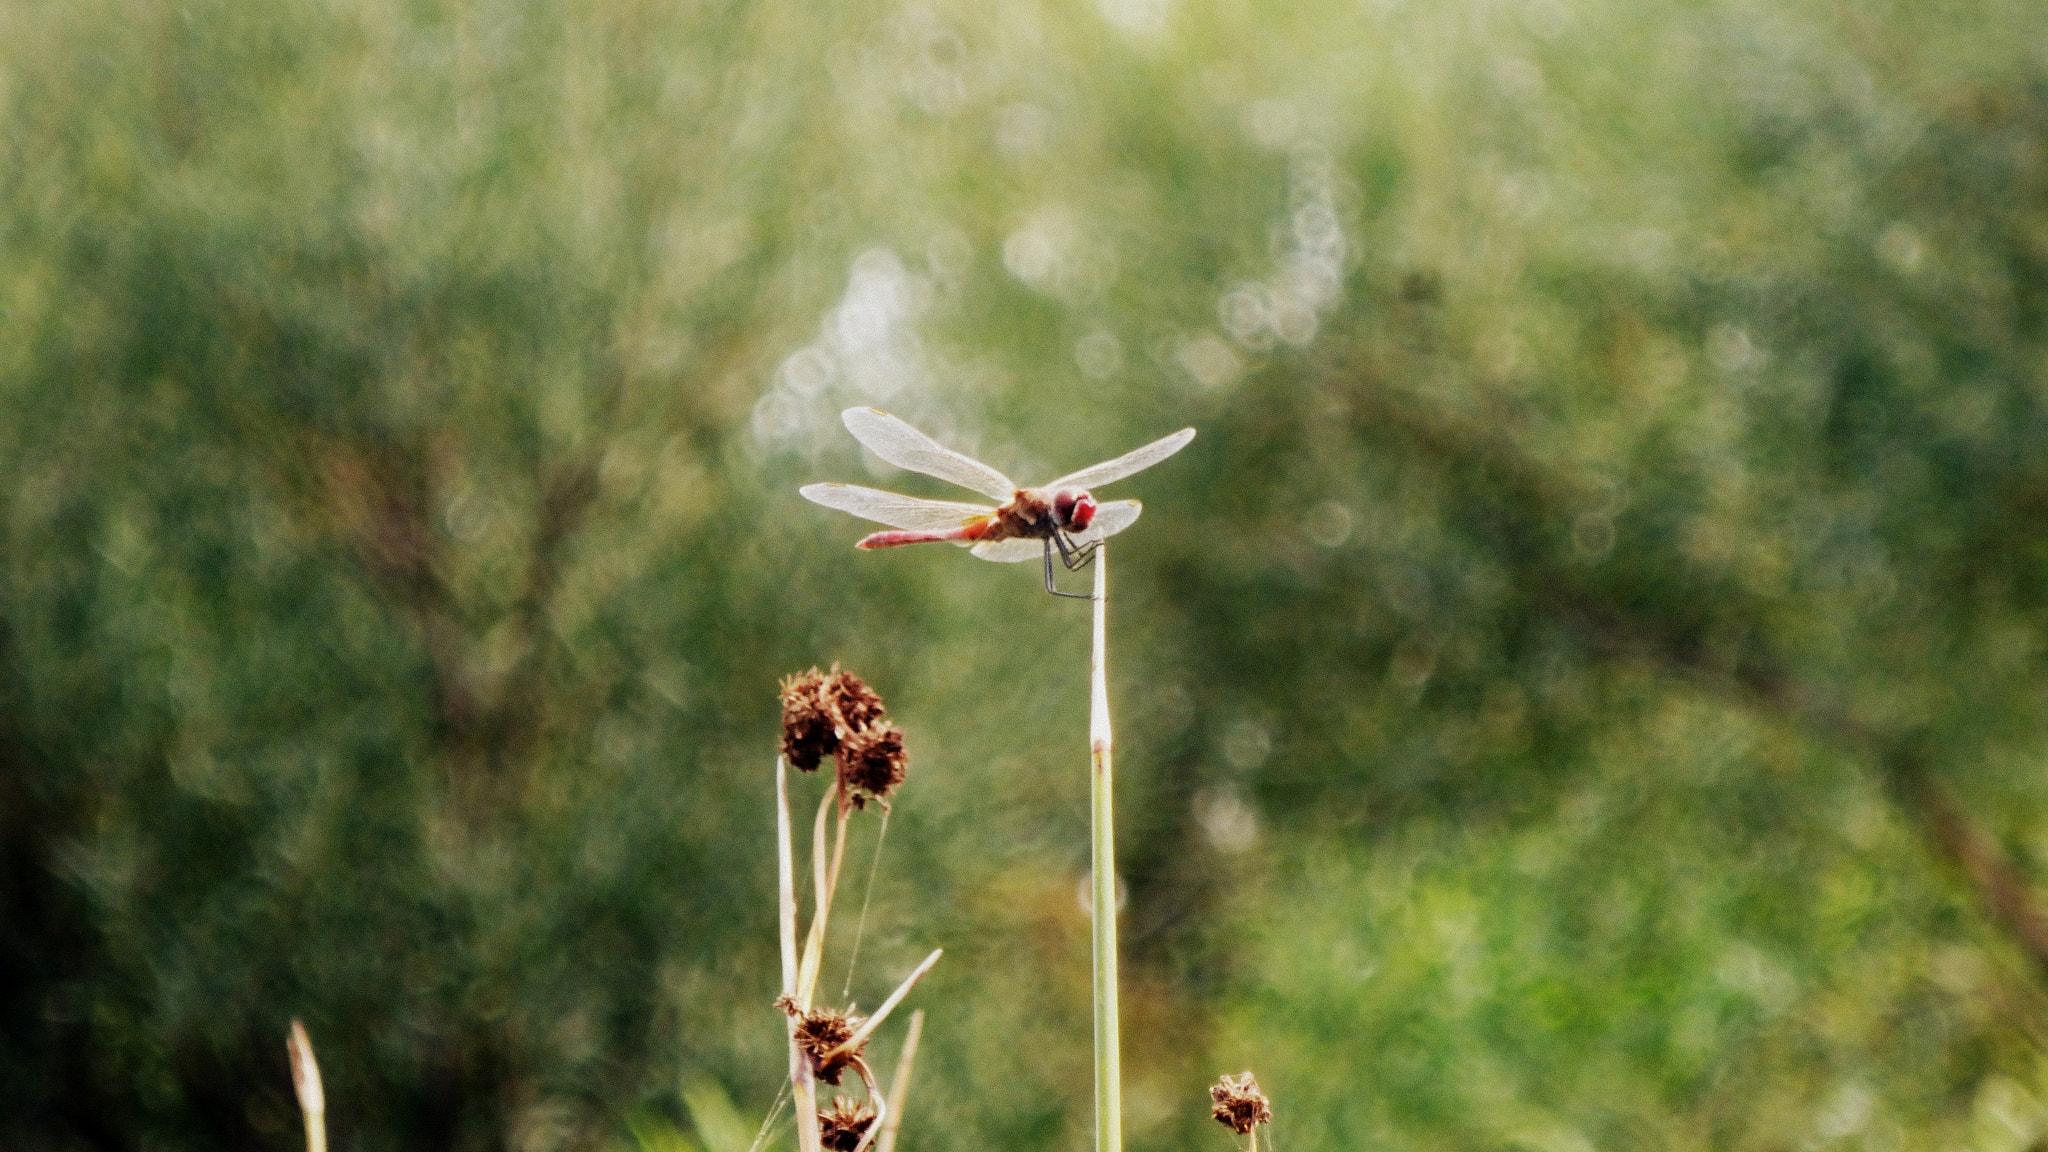 Panasonic DMC-SZ9 sample photo. I love this insect photography